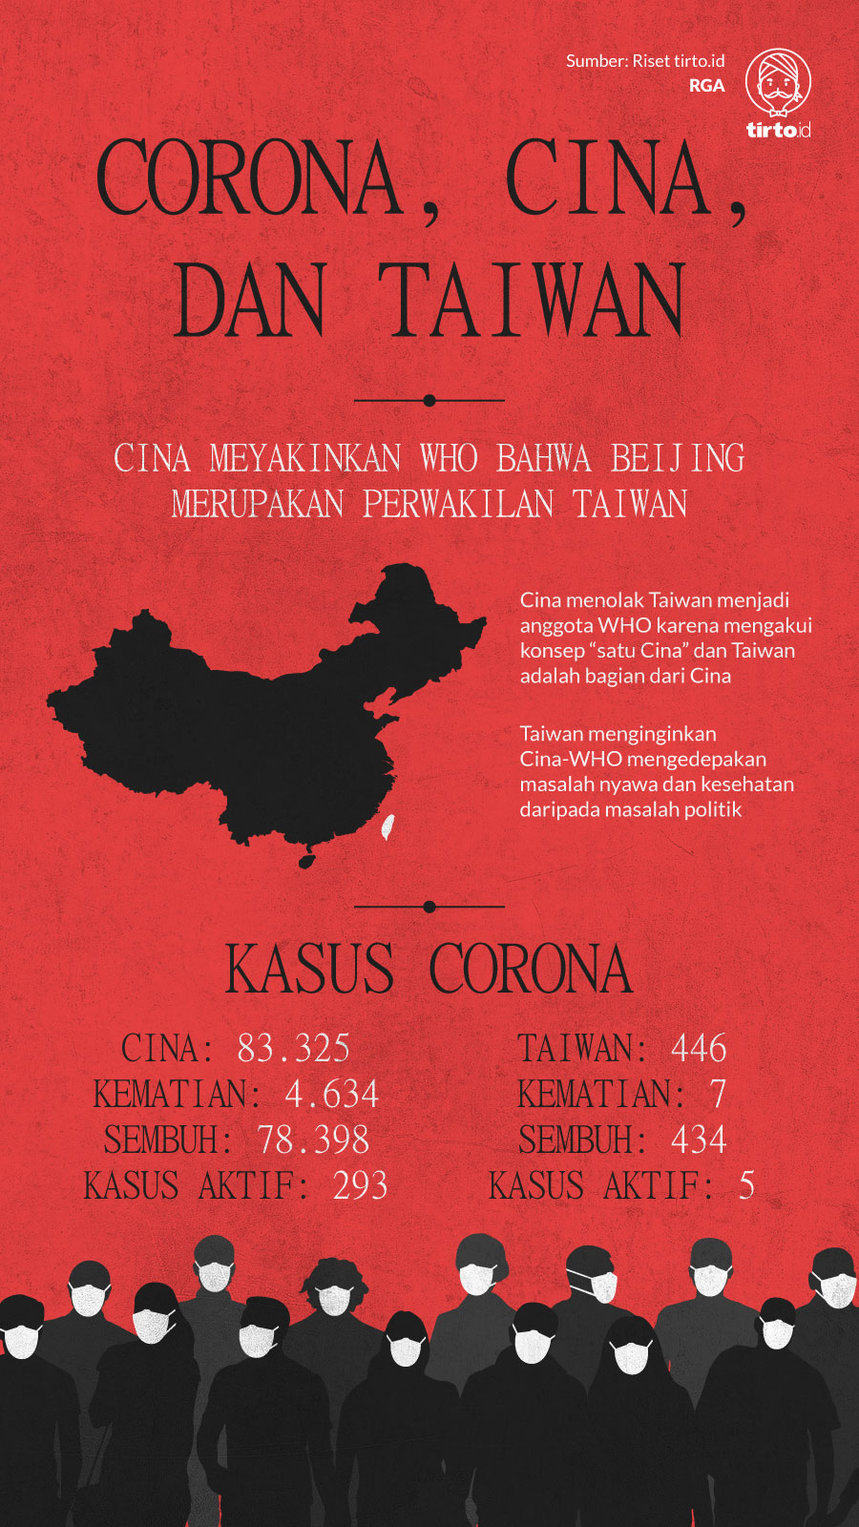 Infografik Corona Cina dan Taiwan